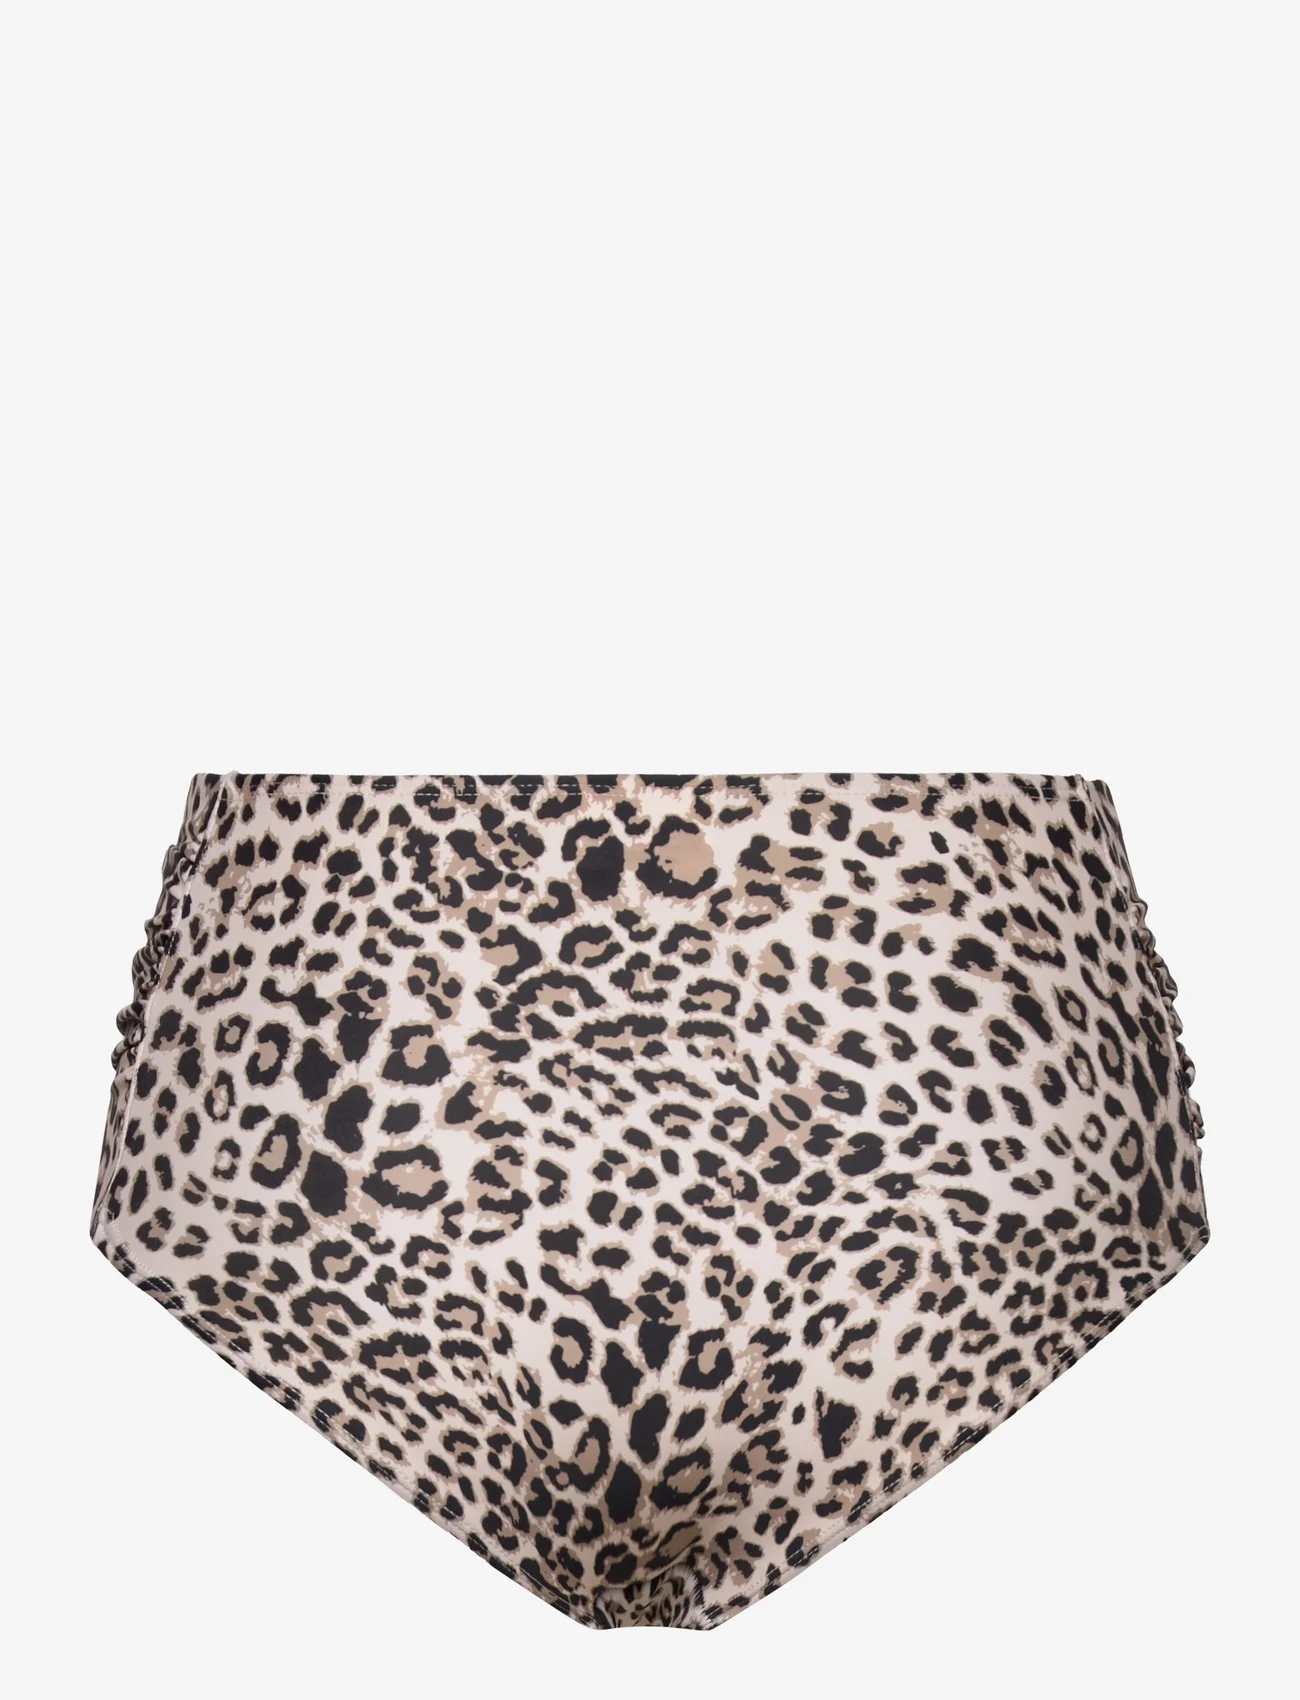 Panos Emporio - PE Leopard Olympia btm - high waist bikini bottoms - leopard - 1